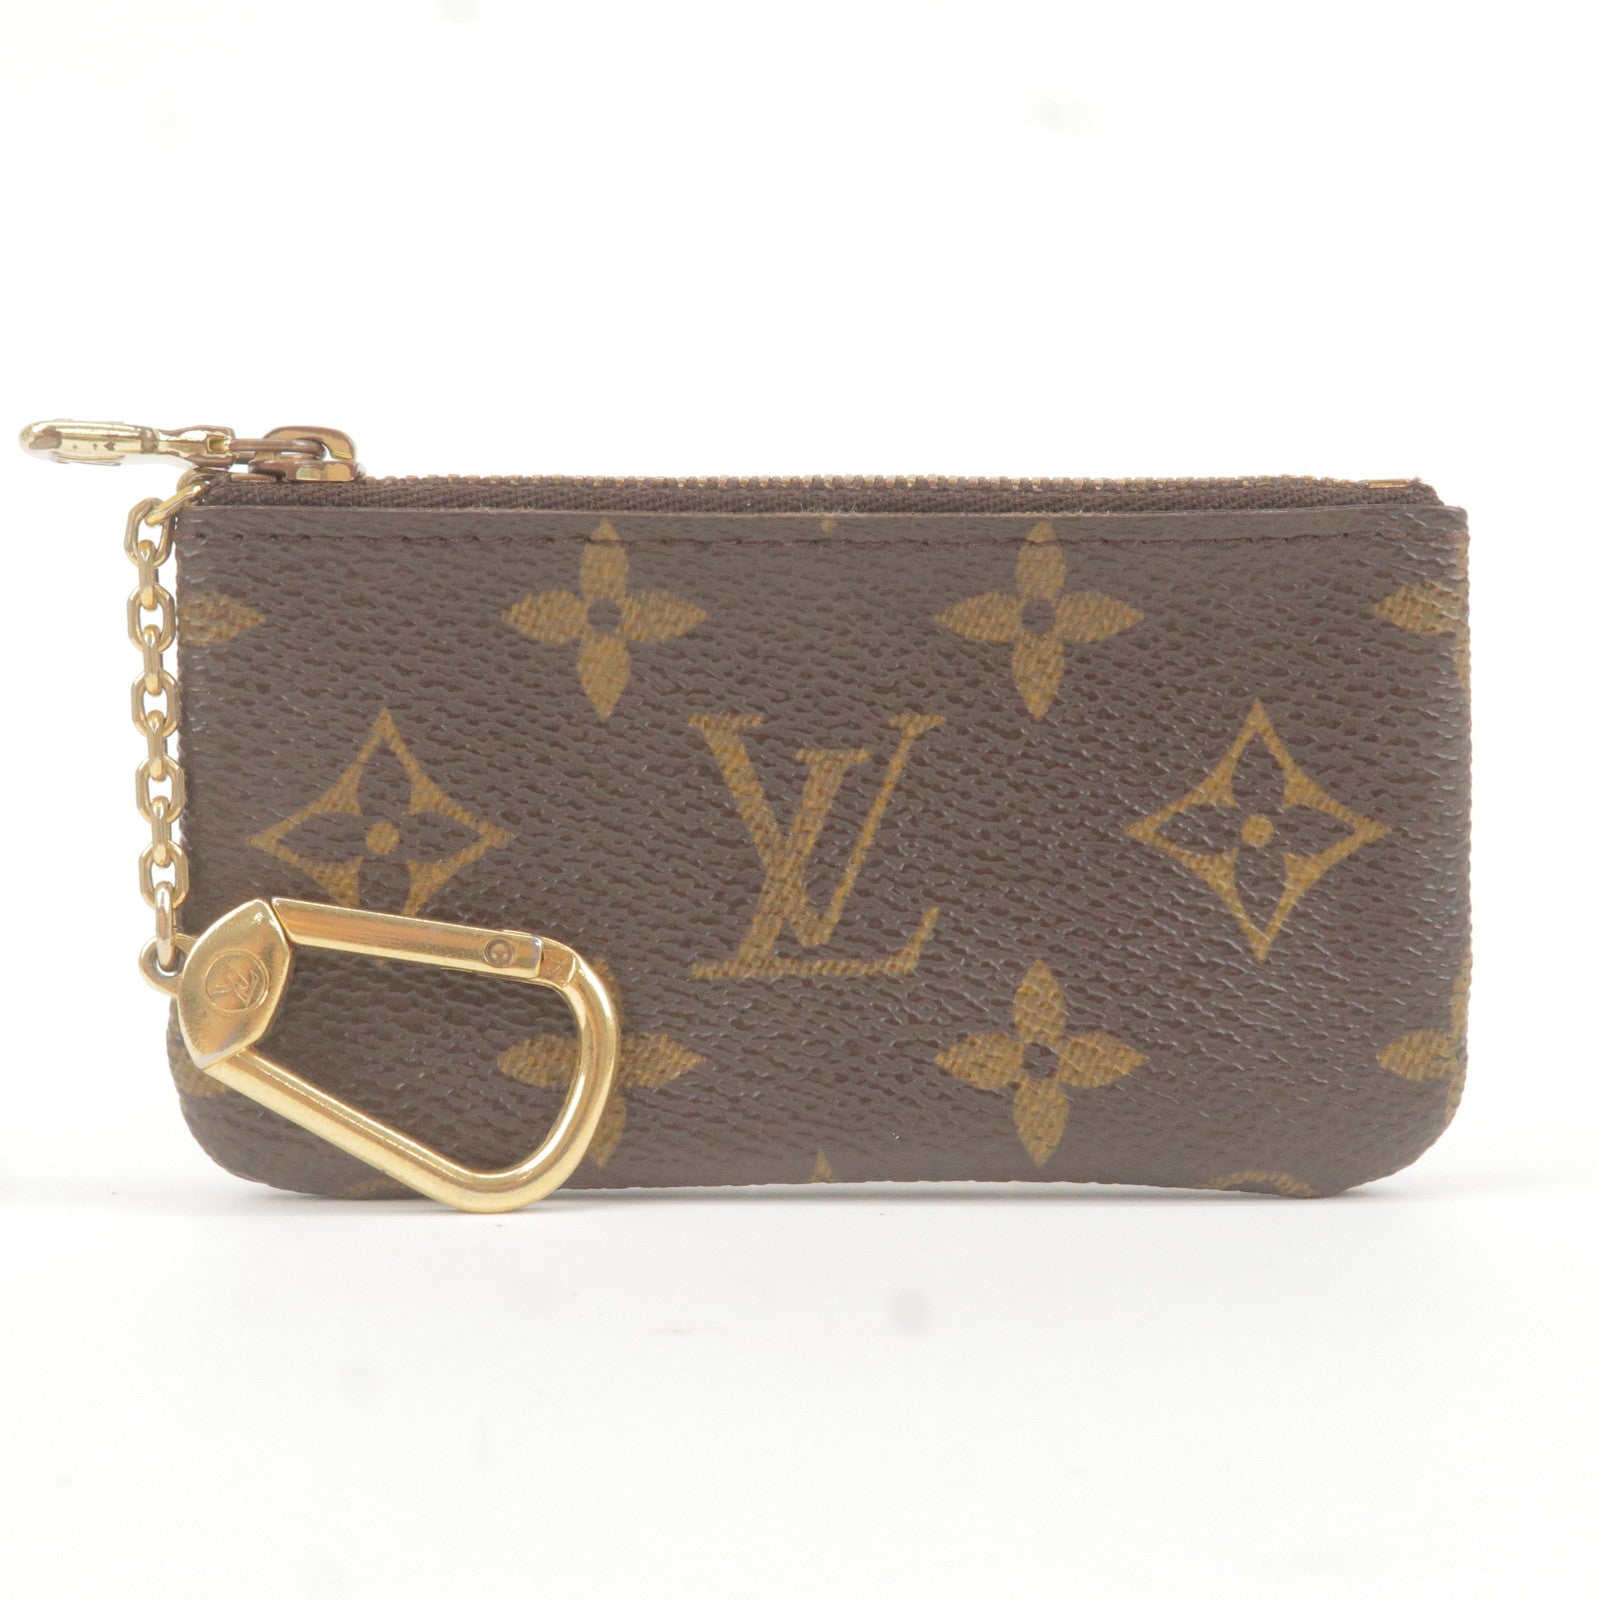 Luxury brand products-LV, Chanel, Dior..etx - LOUIS VUITTON VIRGIL